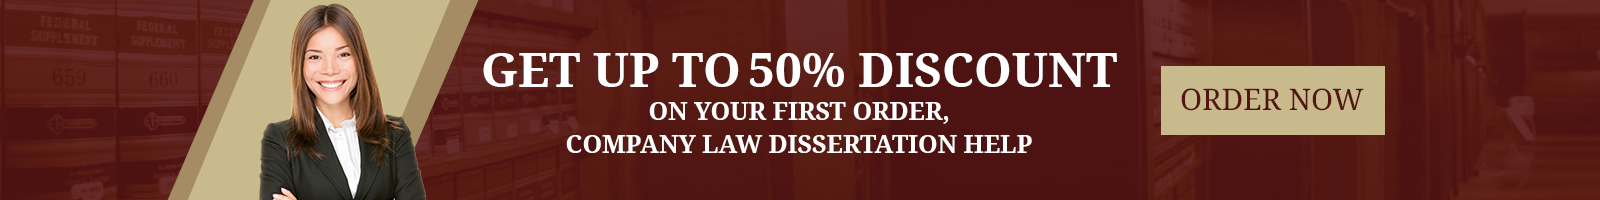 Company Law Dissertation Help